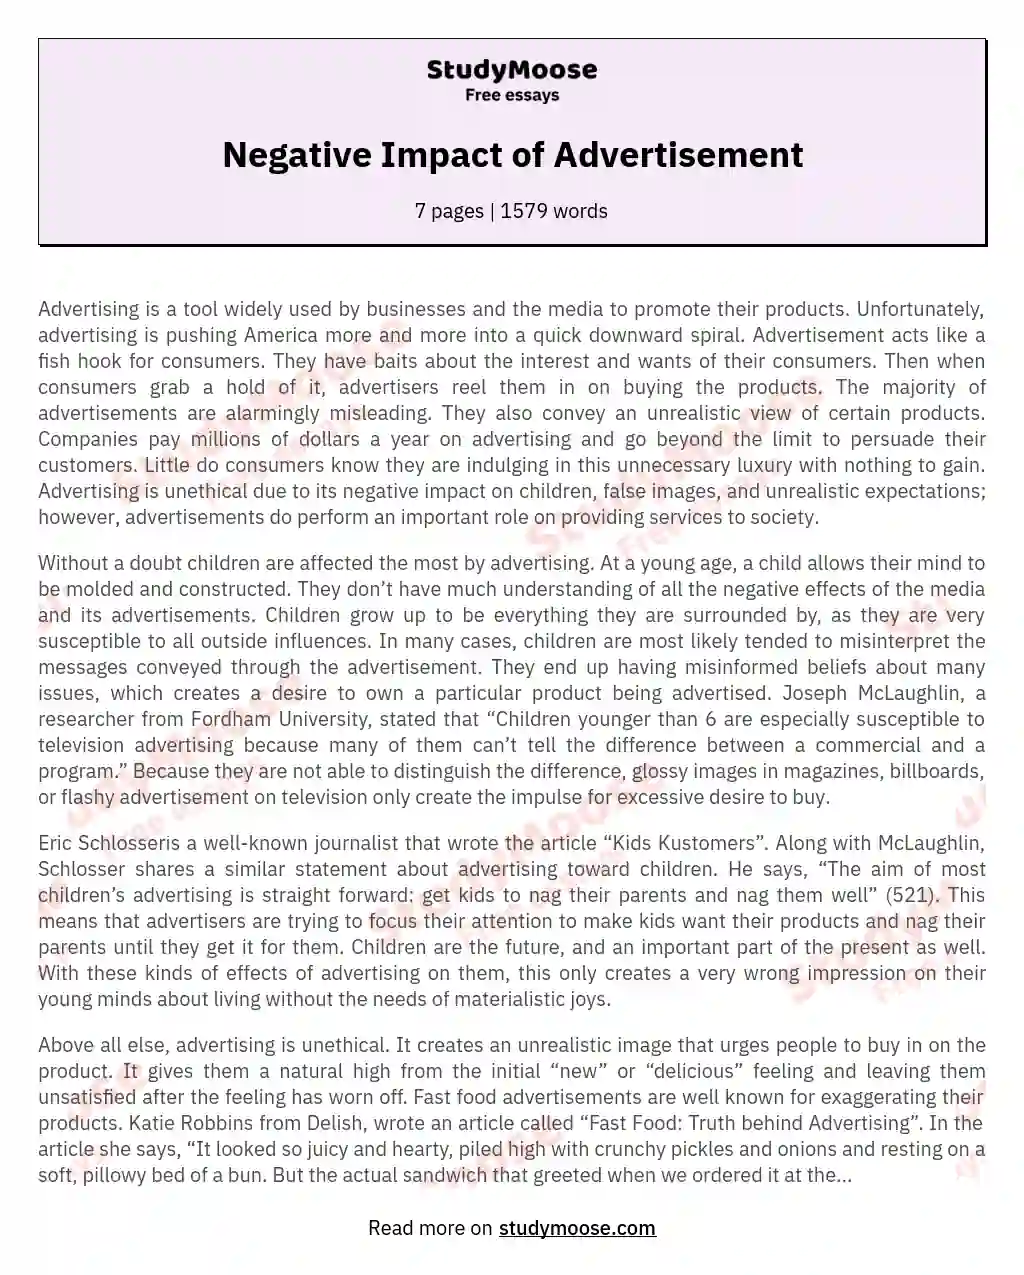 Negative Impact of Advertisement essay